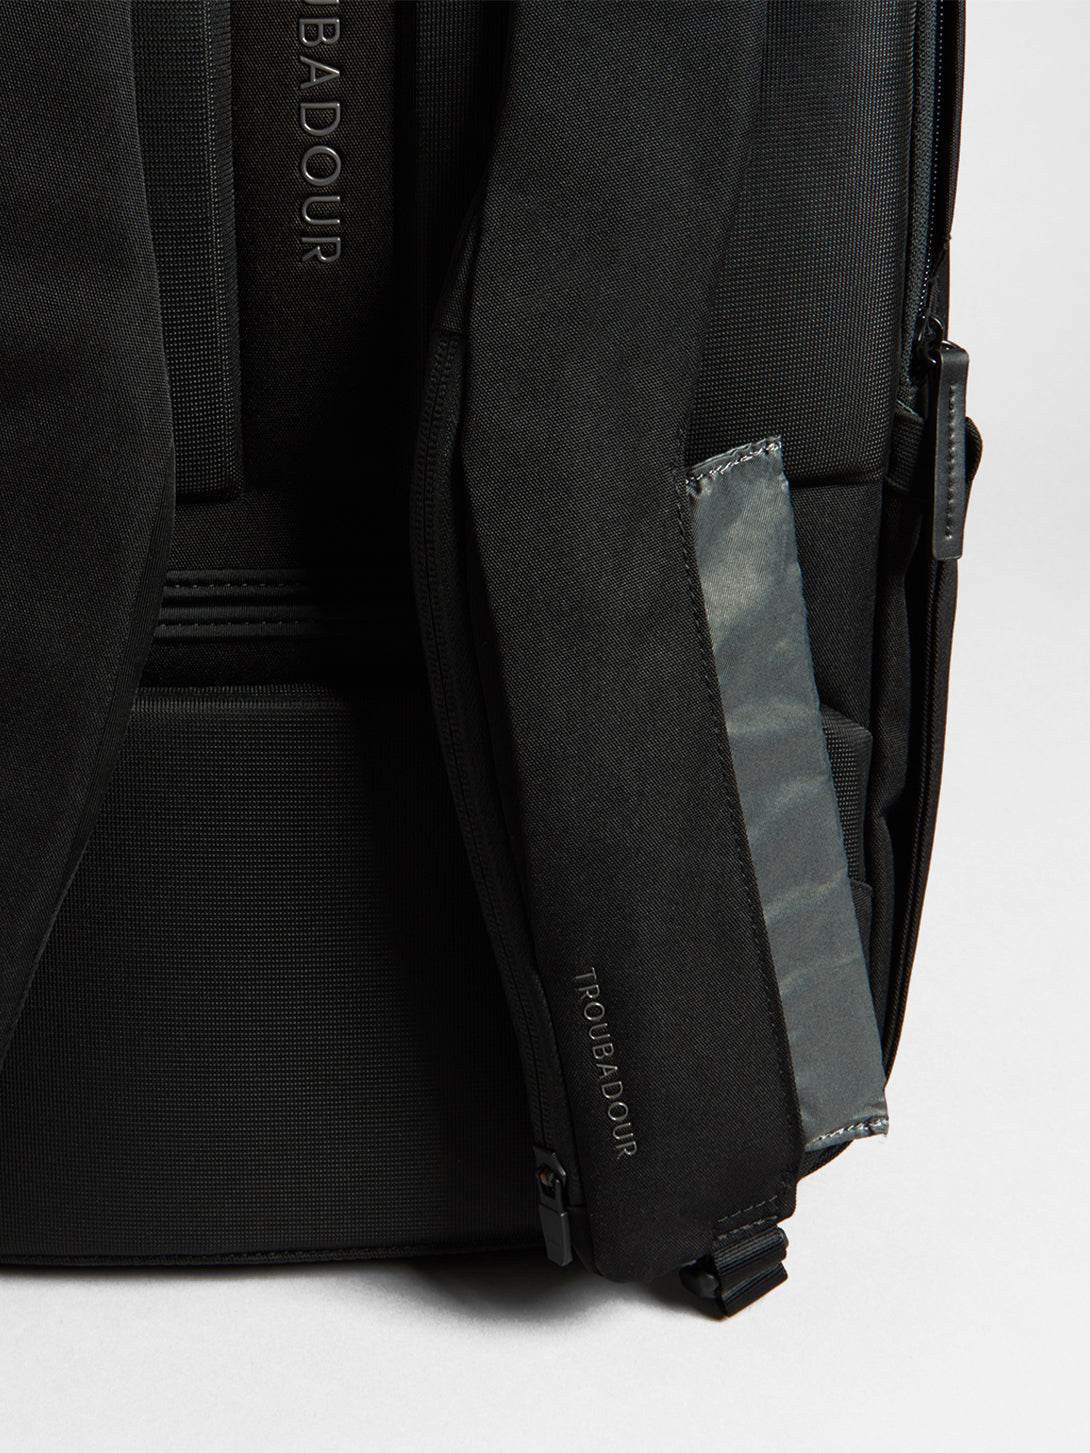 Black Apex Backpack Everyday Durable Bag Troubadour